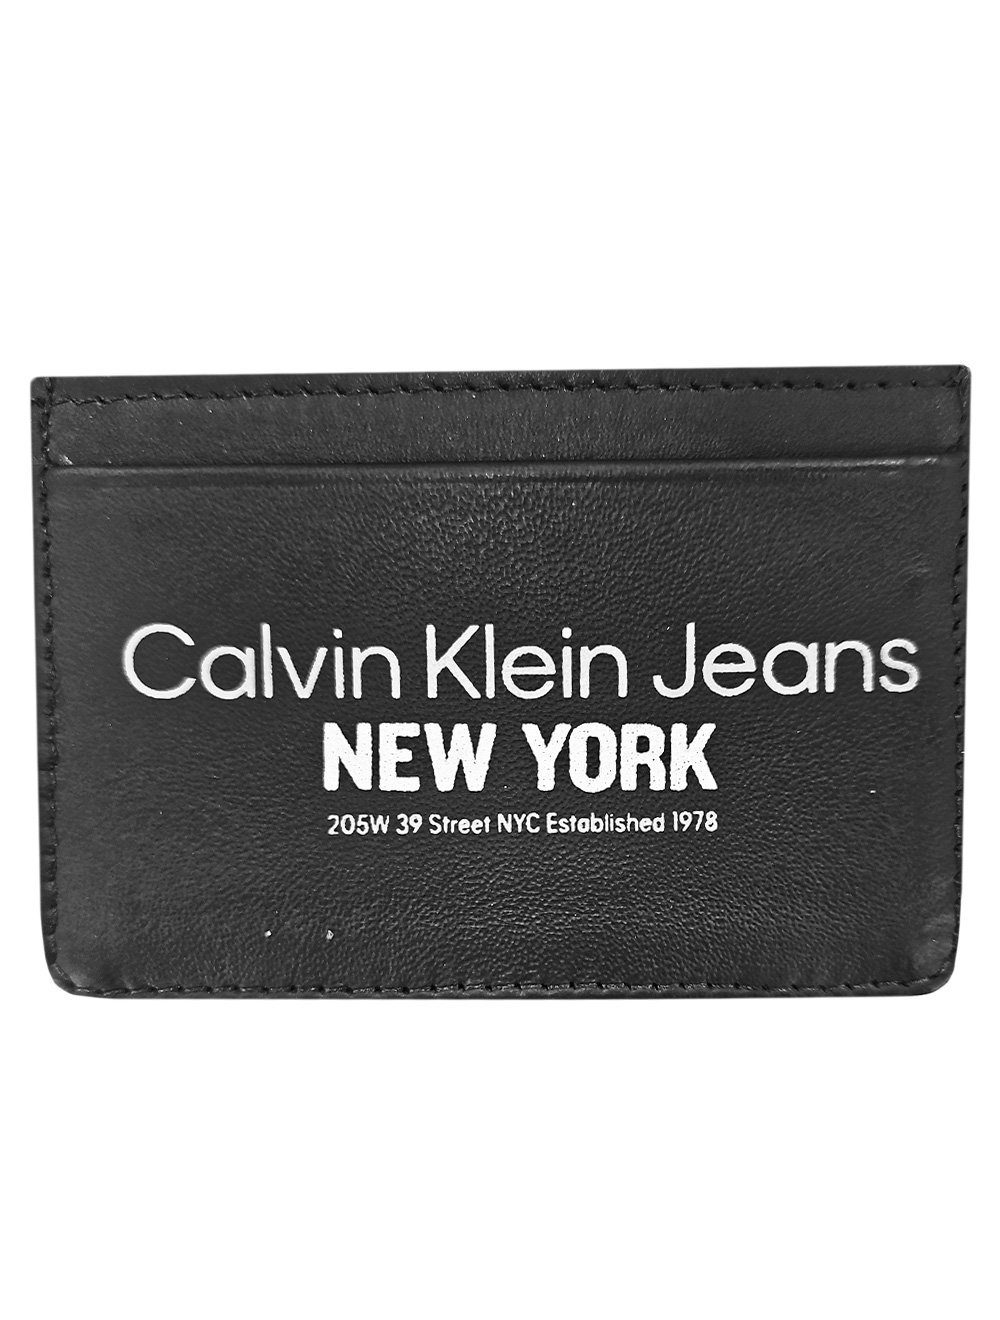 Carteira Calvin Klein Jeans Masculina Porta Cartão CKJ Silk New York Preta